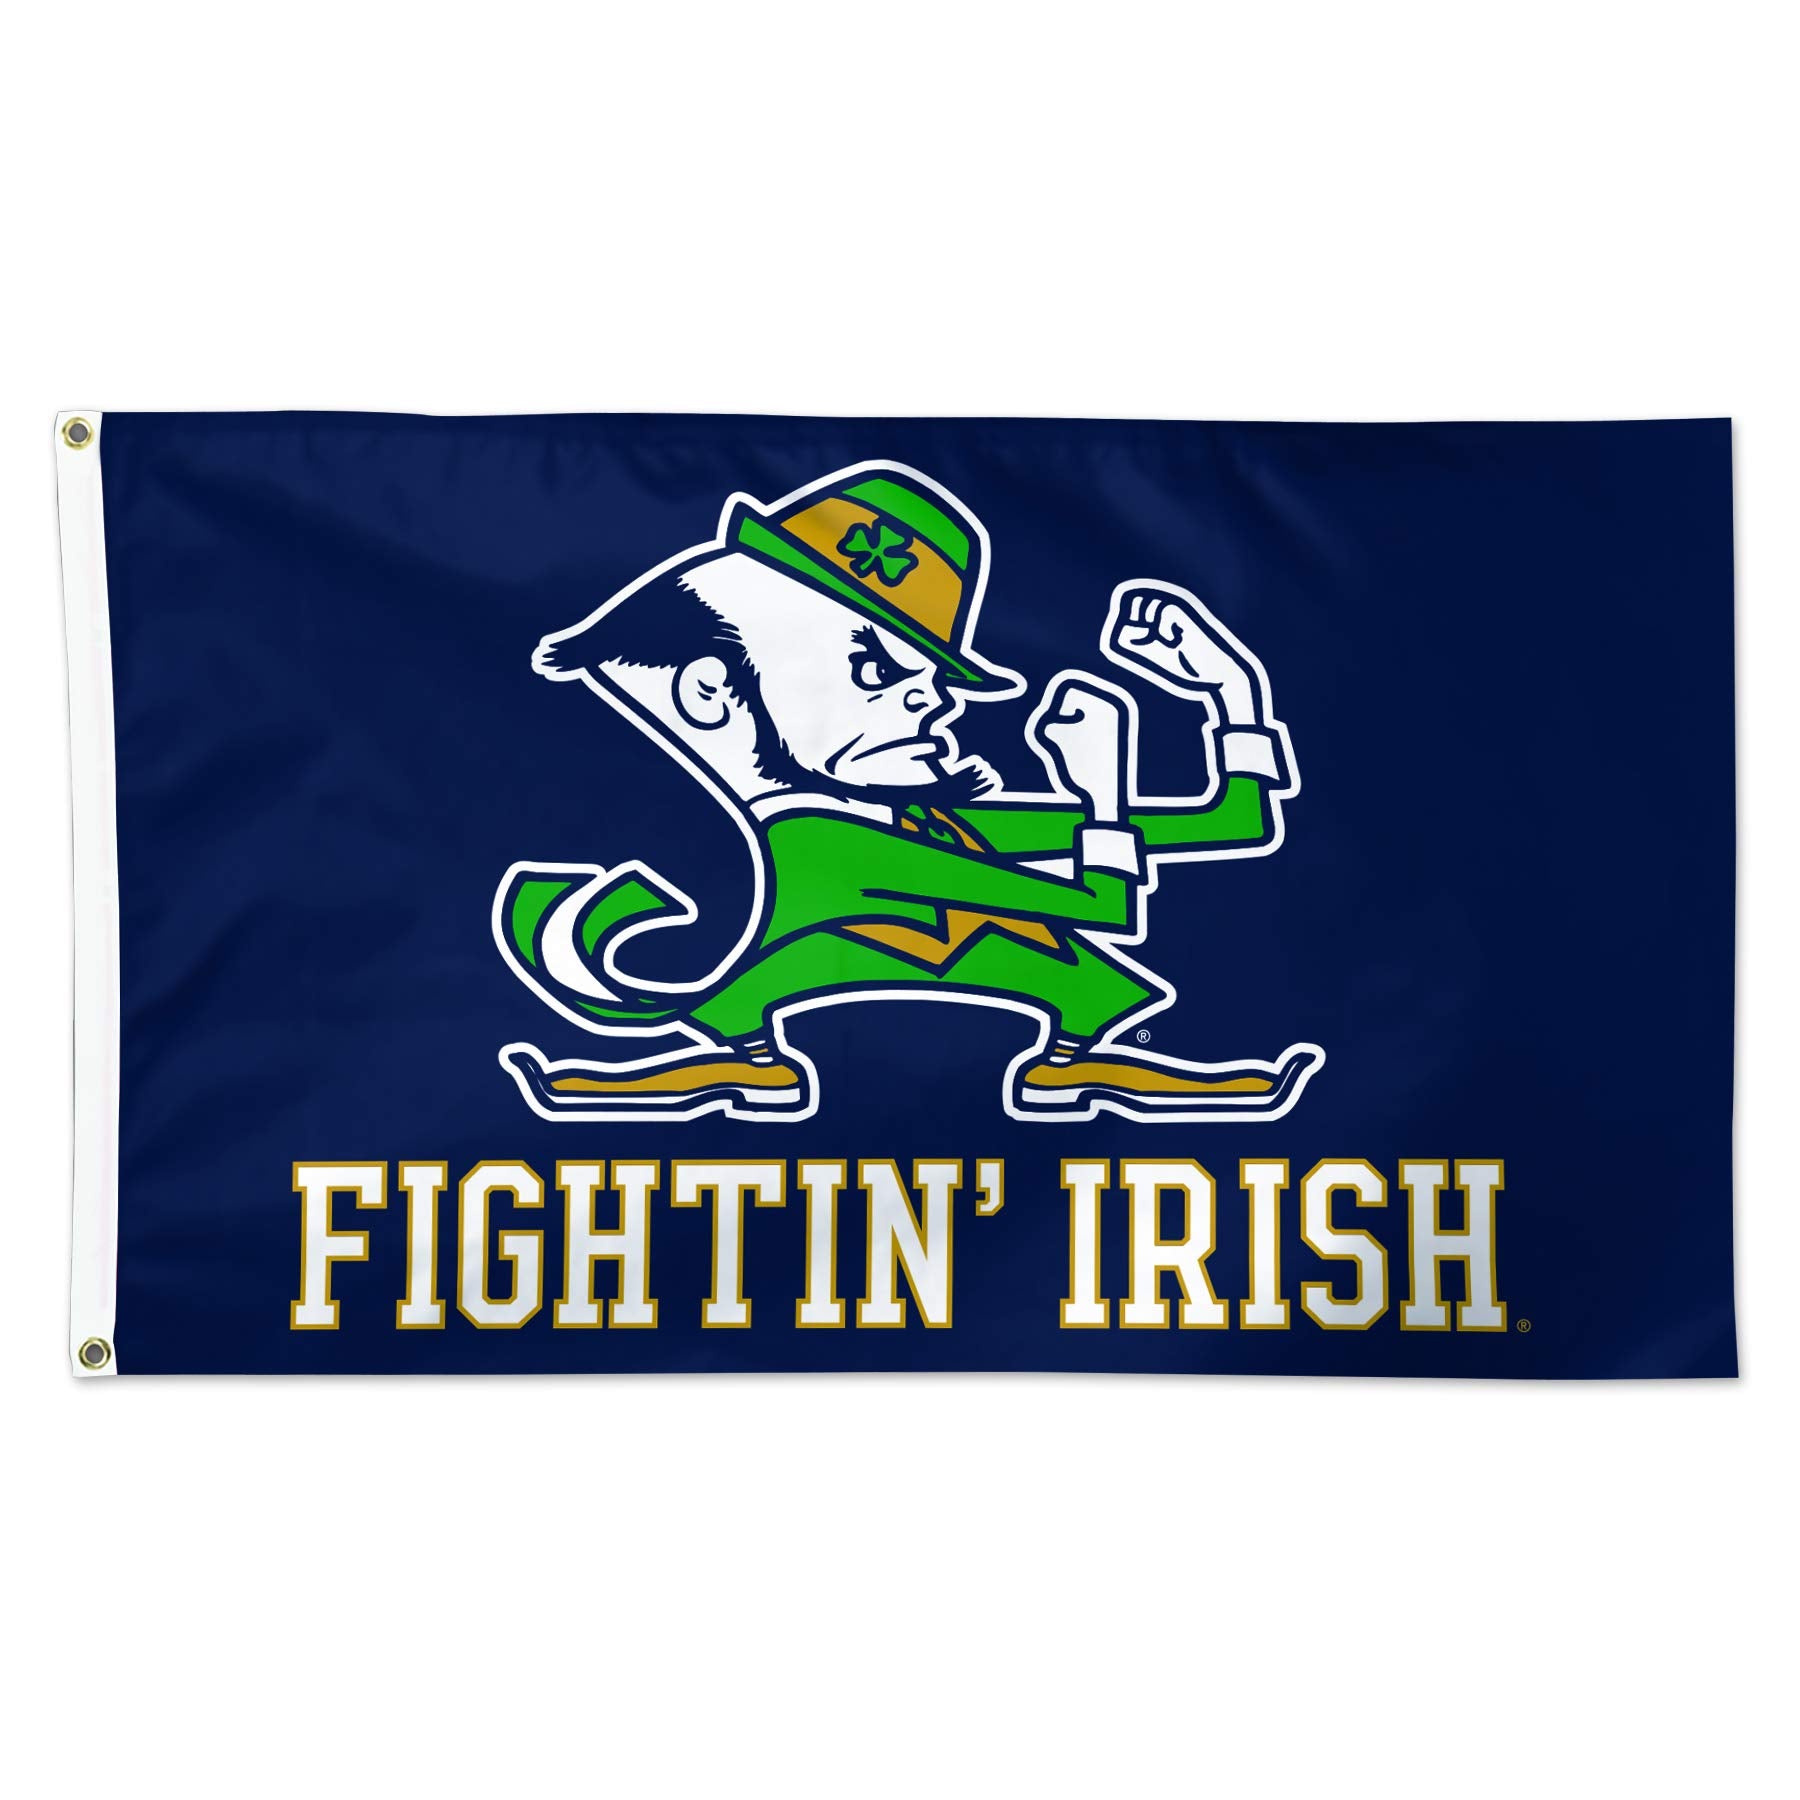 NOTRE DAME FIGHTING IRISH FIGHTING IRISH FLAG - DELUXE 3' X 5' NCAA